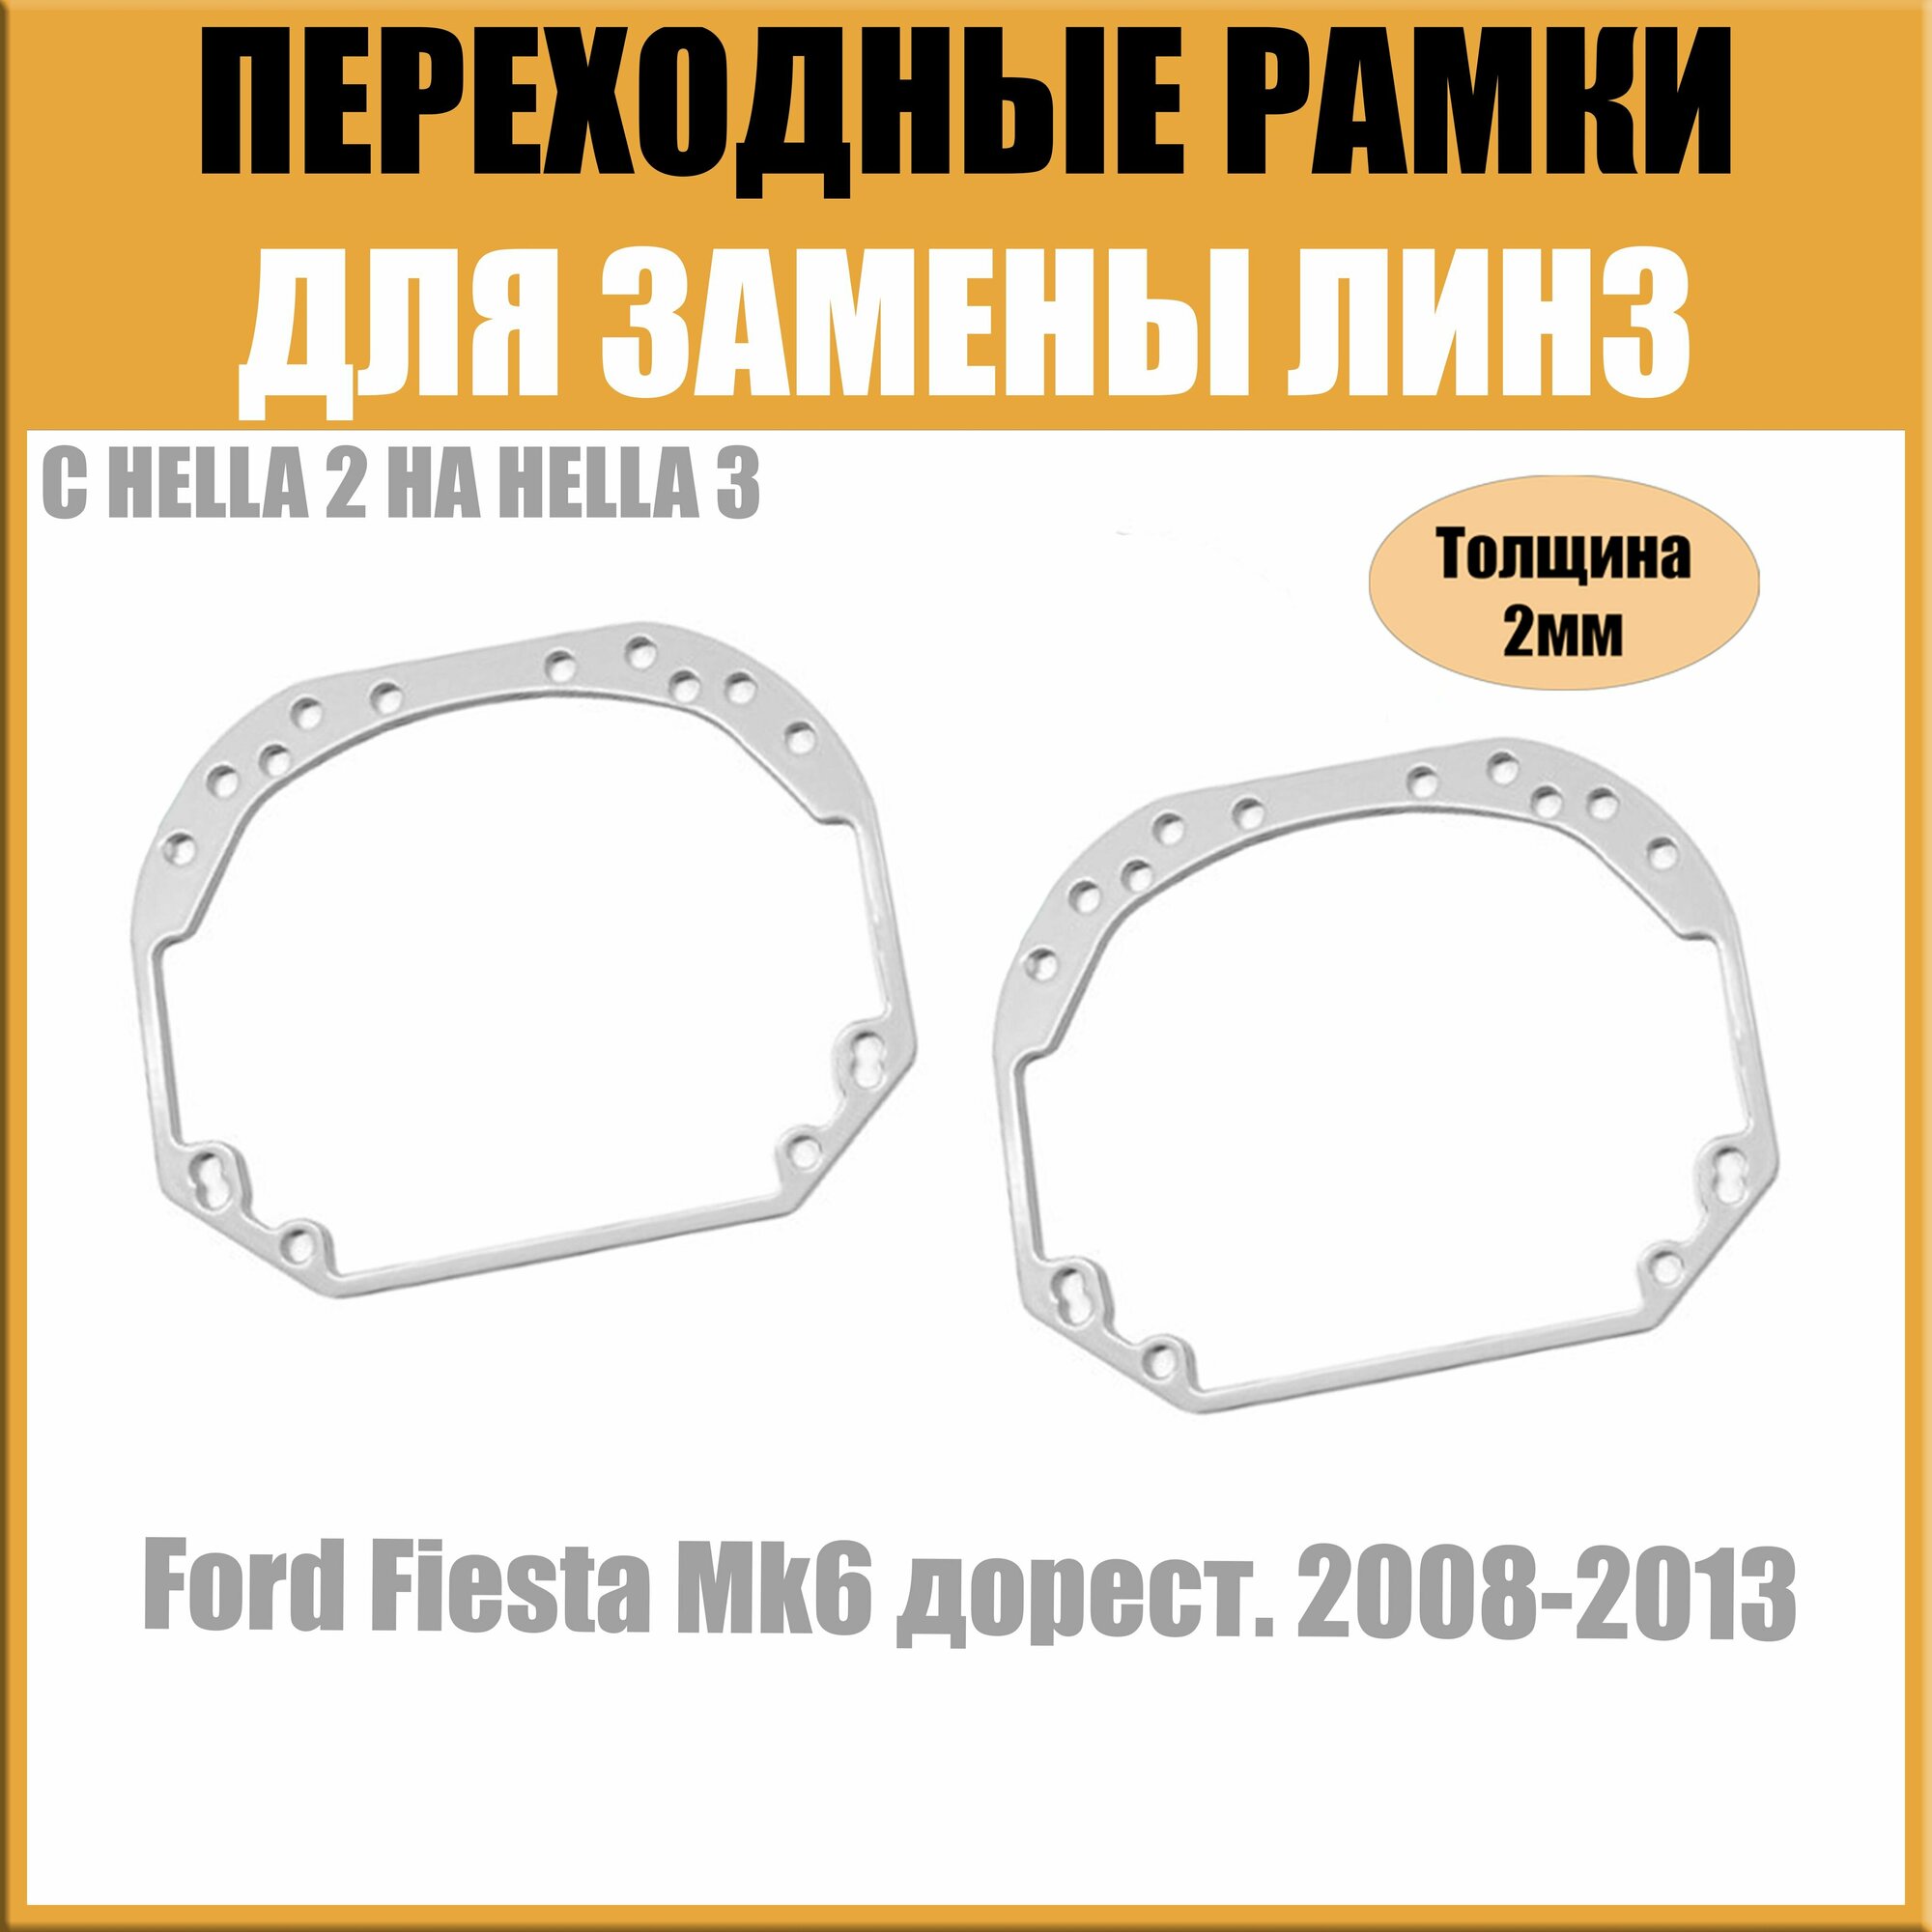 Переходные рамки для линз №1 на Ford Fiesta Mk6 дорест. 2008-2013 под модуль Hella 3R/Hella 3 (Комплект, 2шт)